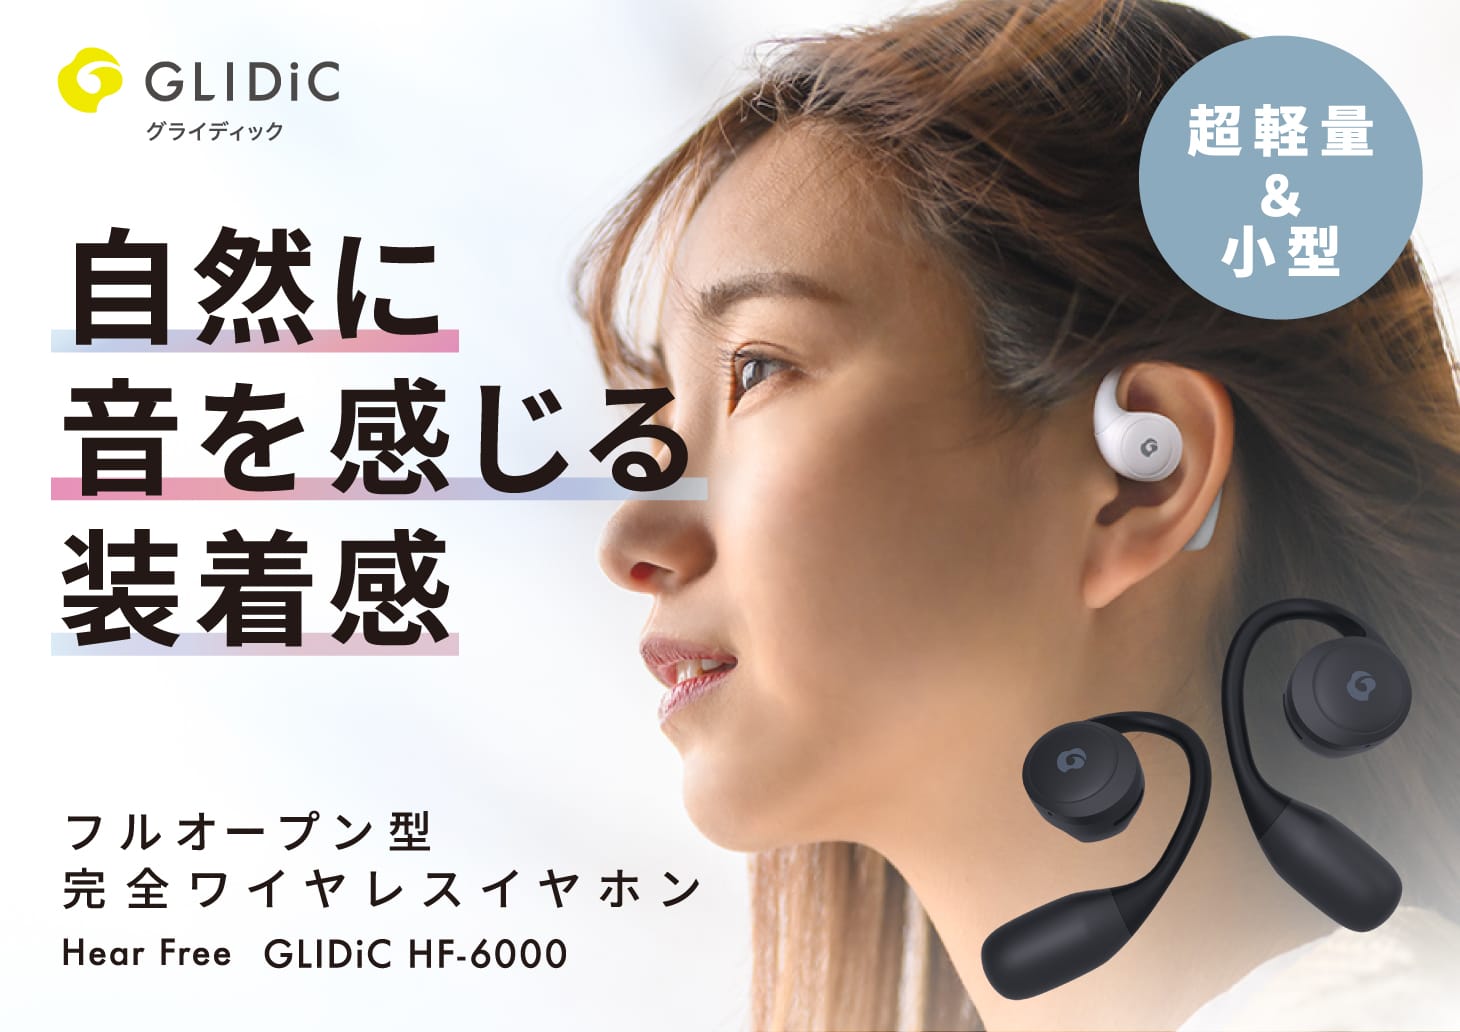 GLIDiC、フルオープン型の完全ワイヤレスイヤフォンを発売